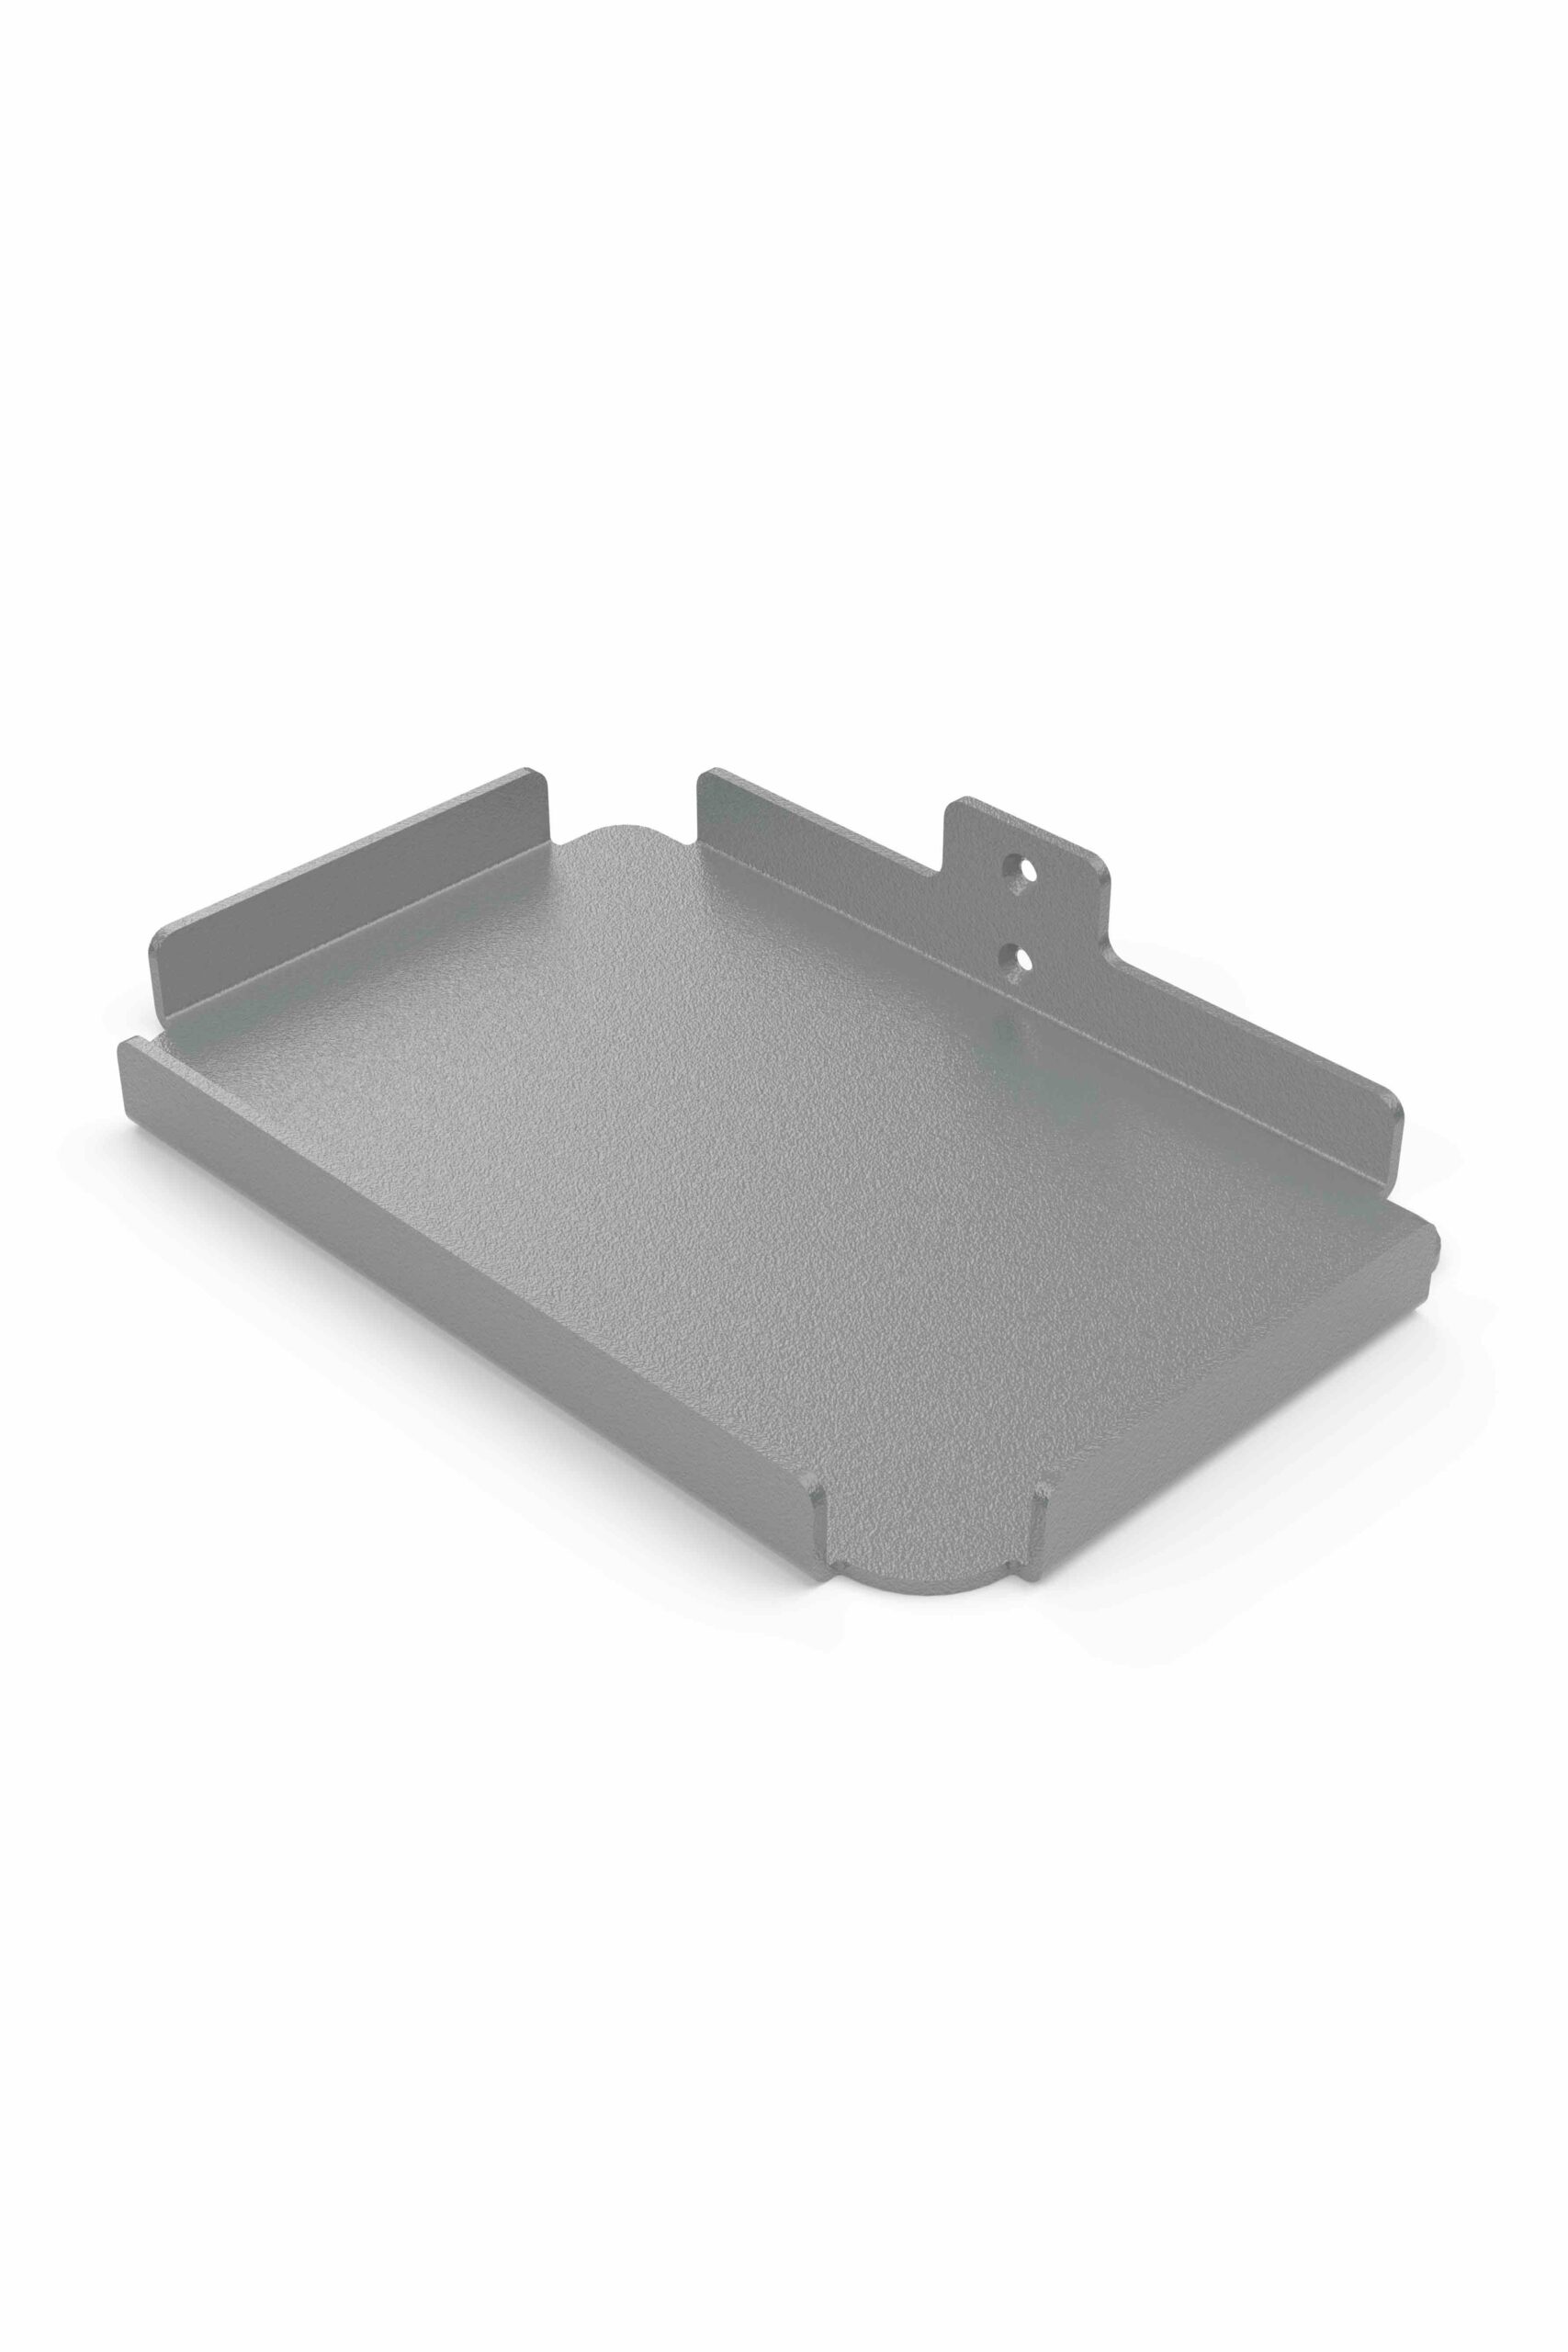 ulf-mks-wandorganizer-aluminium-ablagefläche-rand-ablageplatte-4r-silbergrau-grau